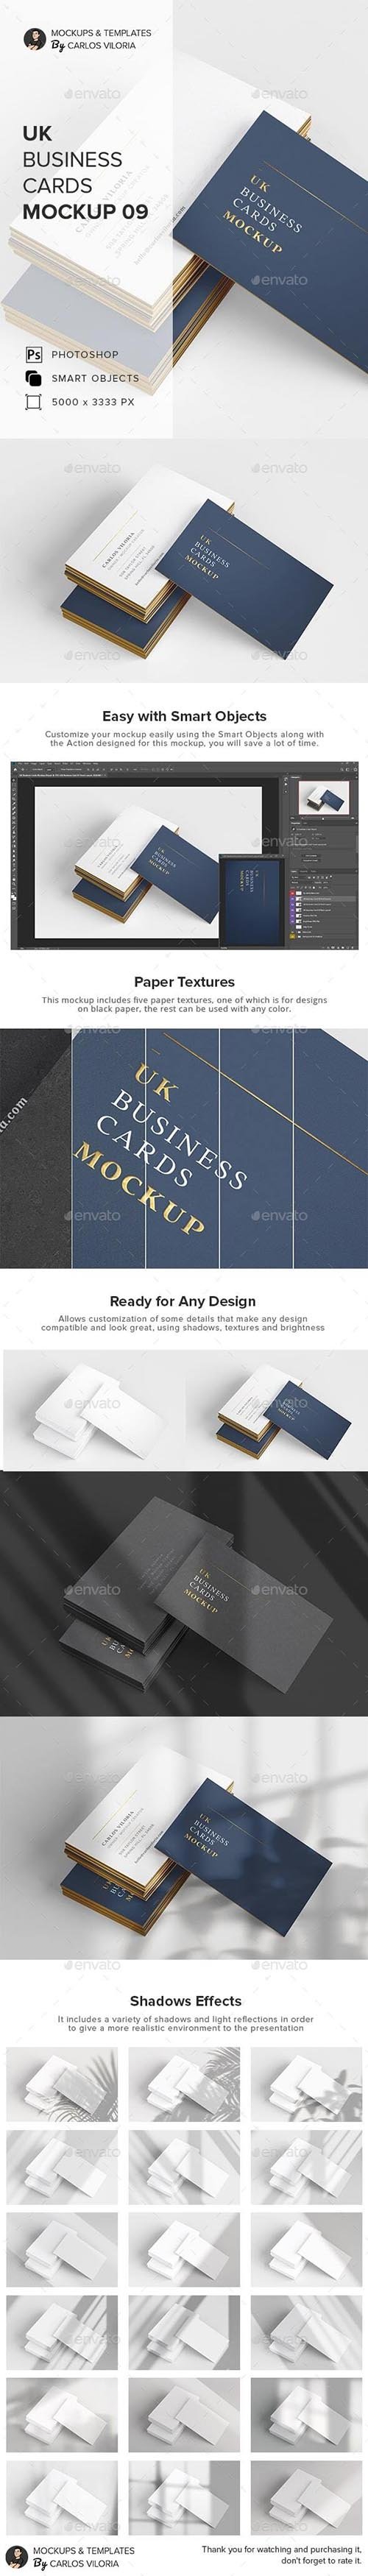 GraphicRiver - UK Business Cards Mockup 09 - 27826545